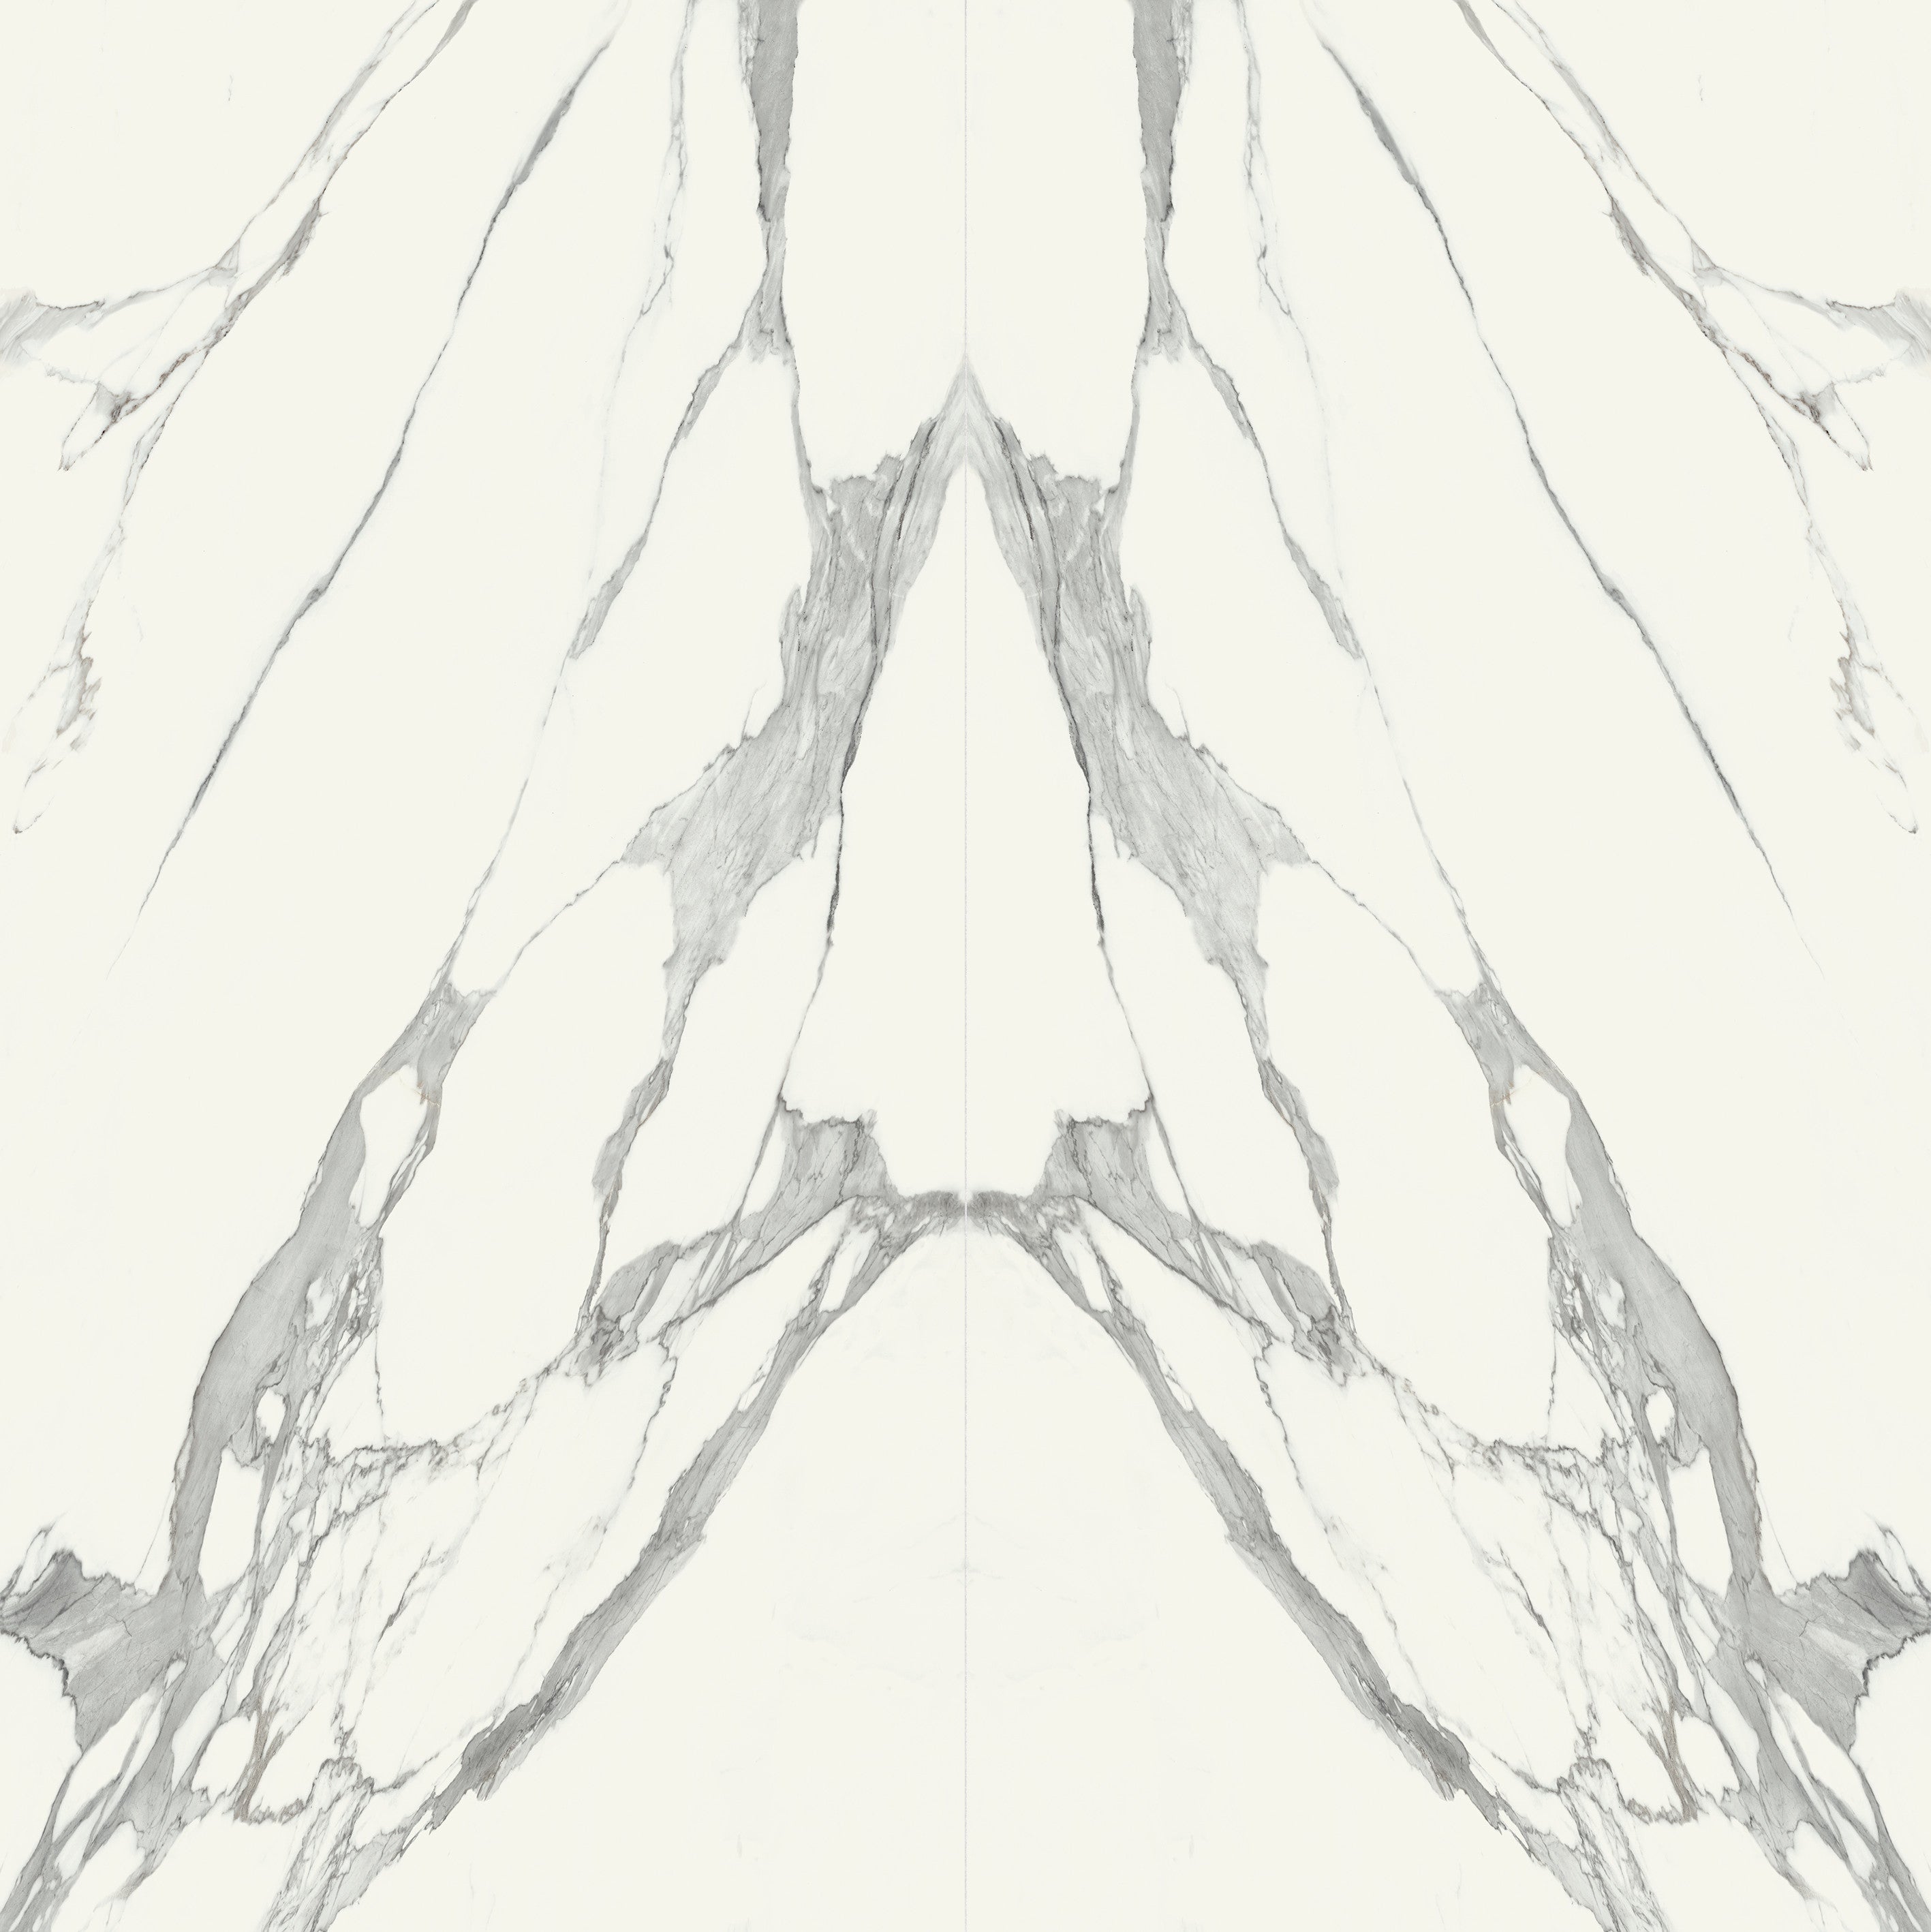 Specchio Carrara White AB 96 x 96 (Polished)